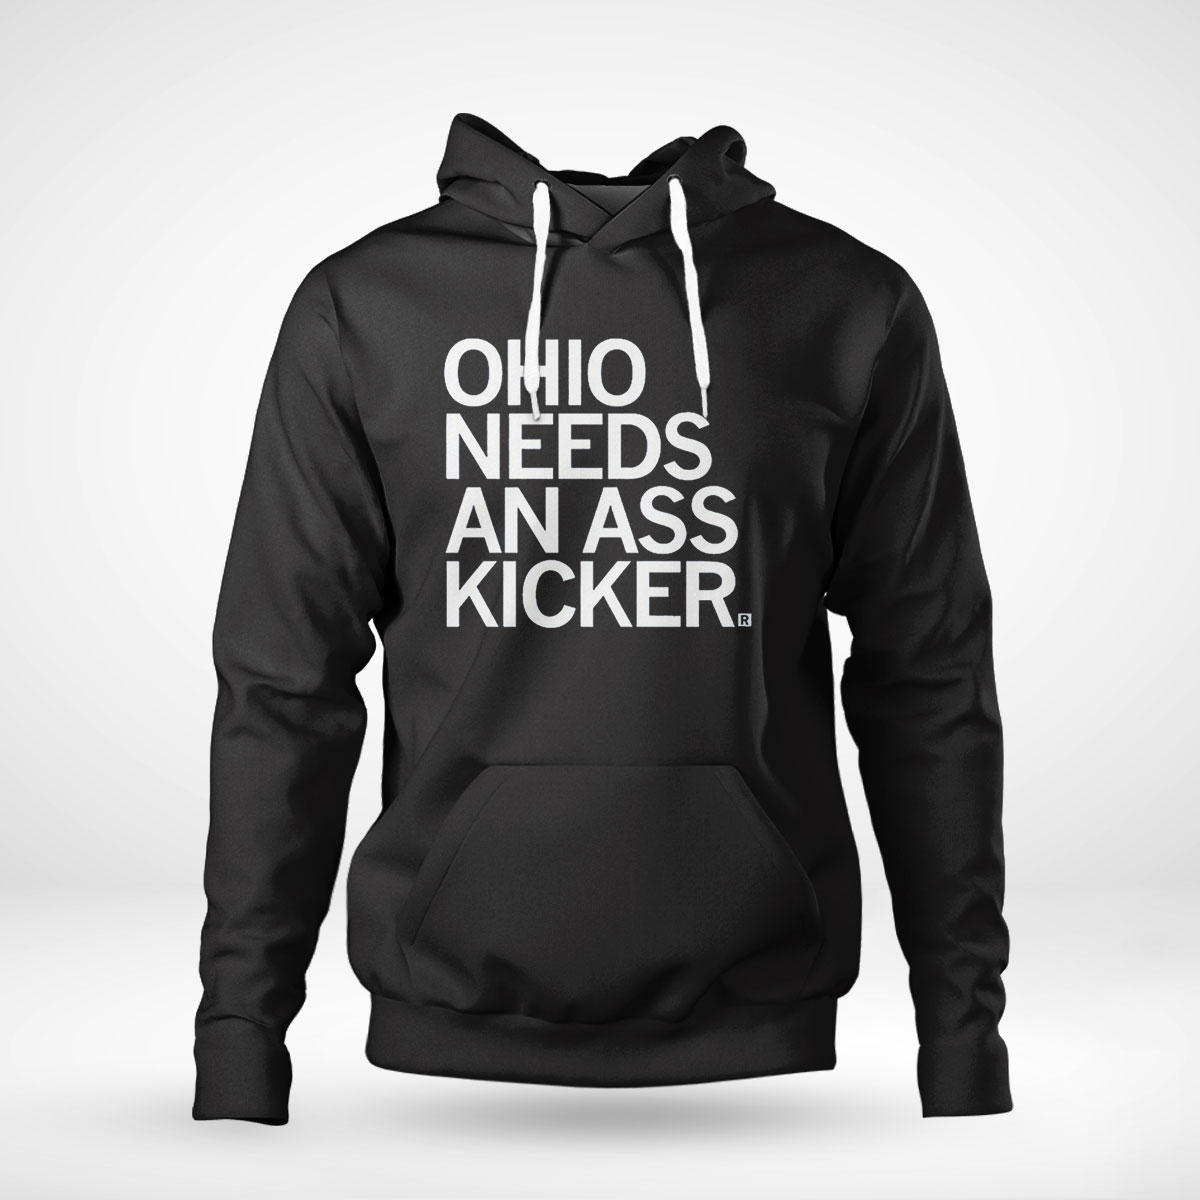 Ohio Needs An Ass Kicker Shirt Hoodie Sweatshirt, Tank Top, Ladies Tee